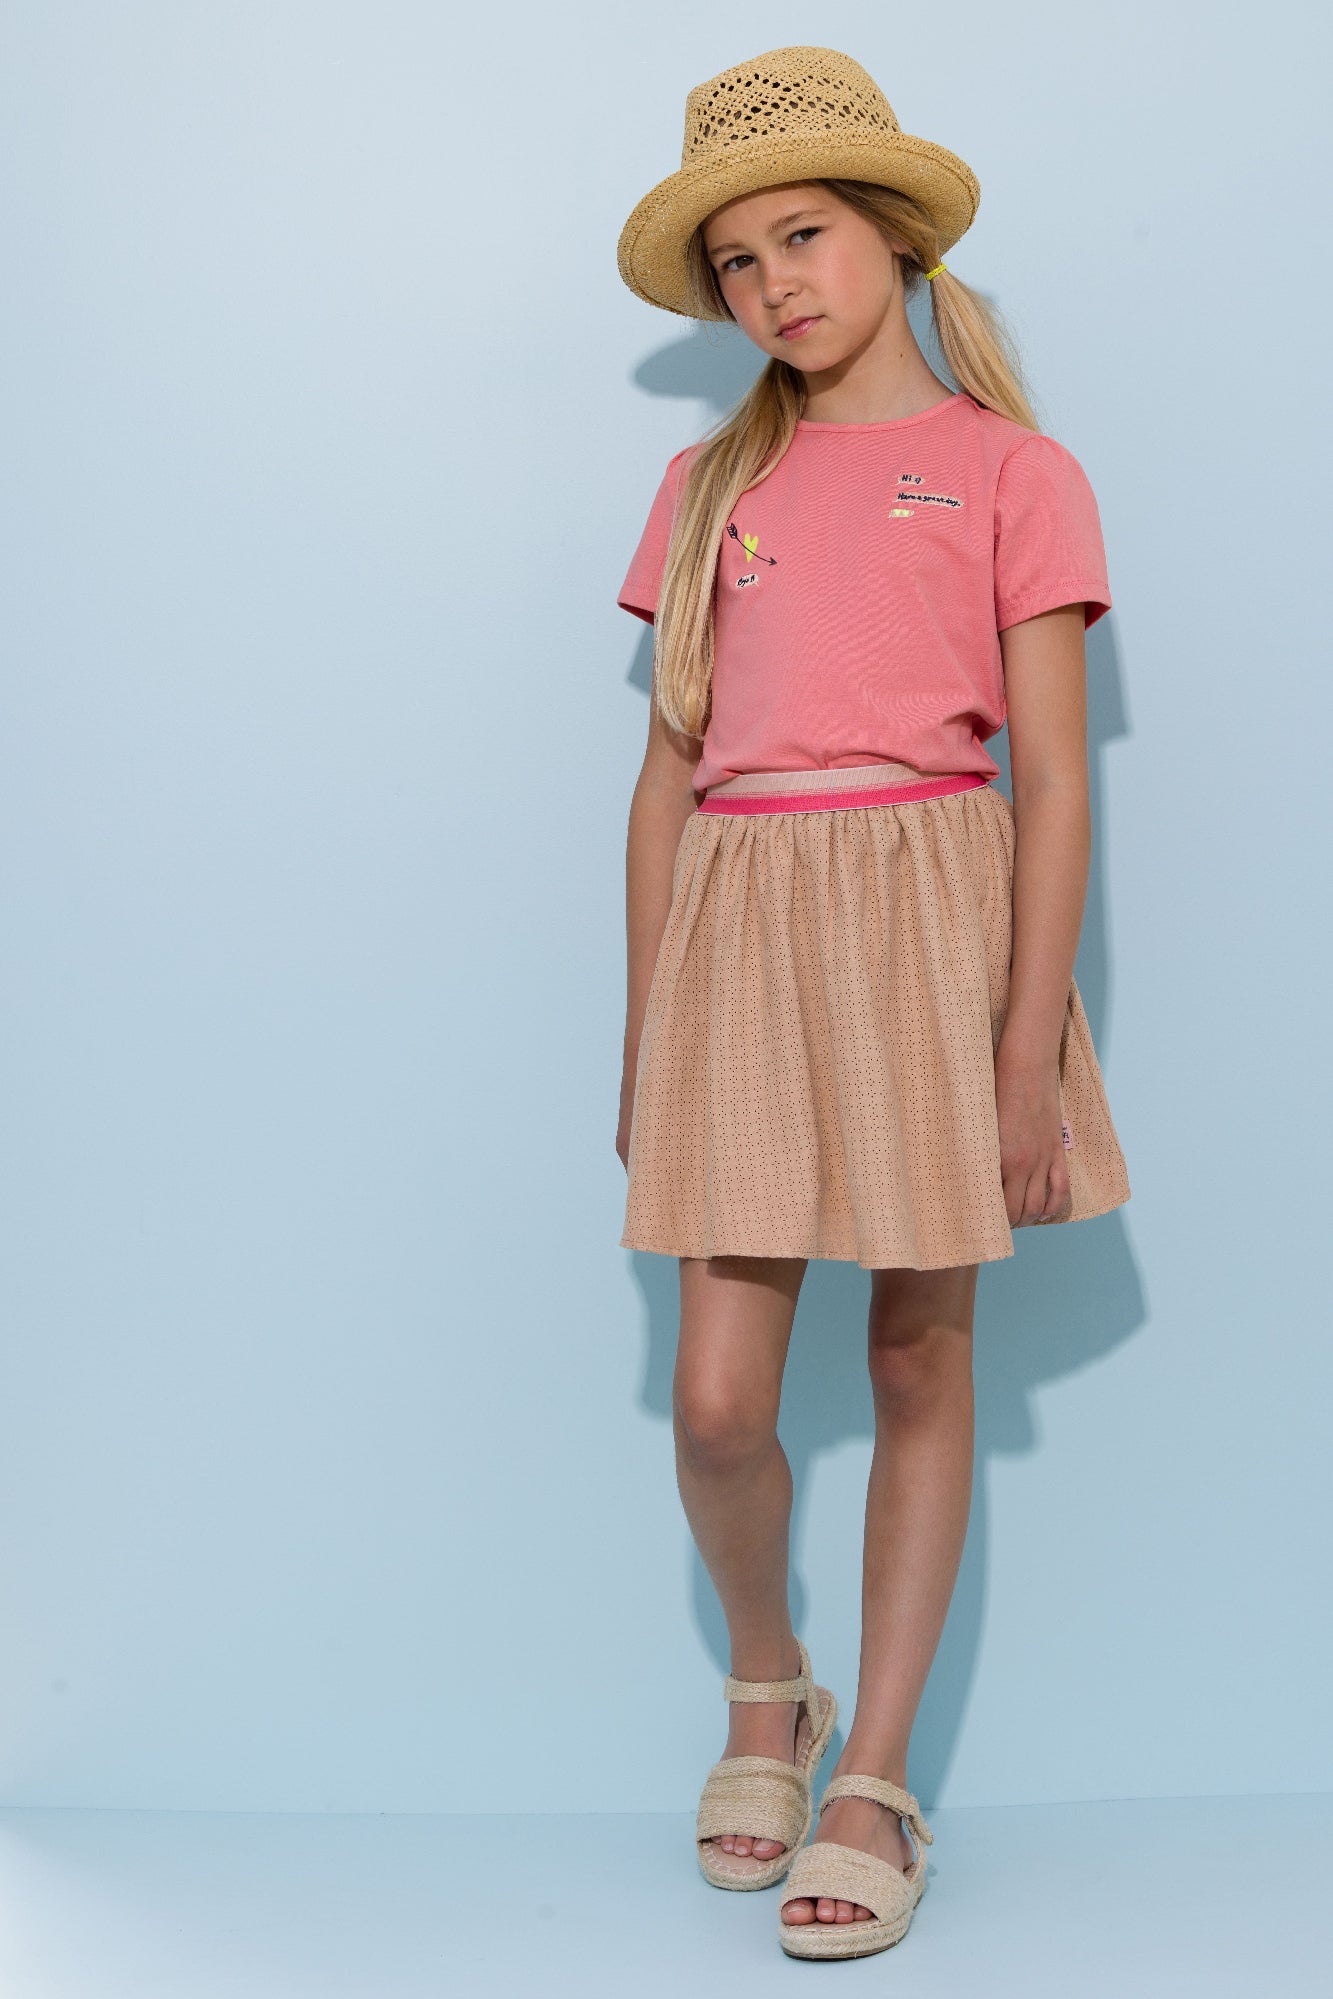 Meisjes Kantal tshirt s/sl with text message van NoNo in de kleur Peach Blossom in maat 134-140.